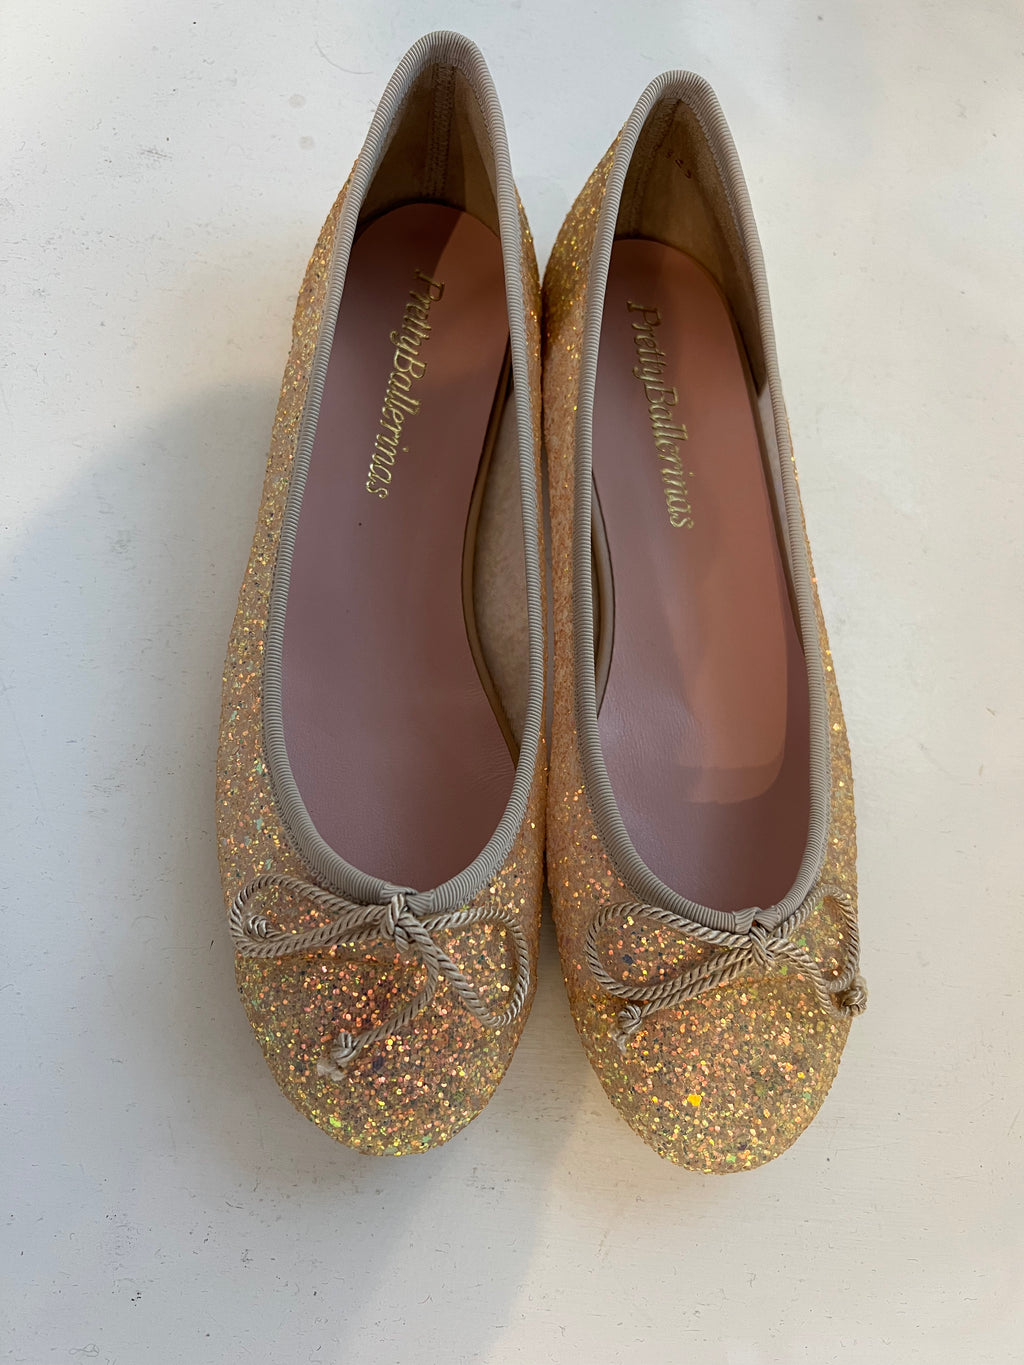 Hetre Alresford Hampshire Shoe Store Pretty Ballerinas Gold Glitter Ballet Pump